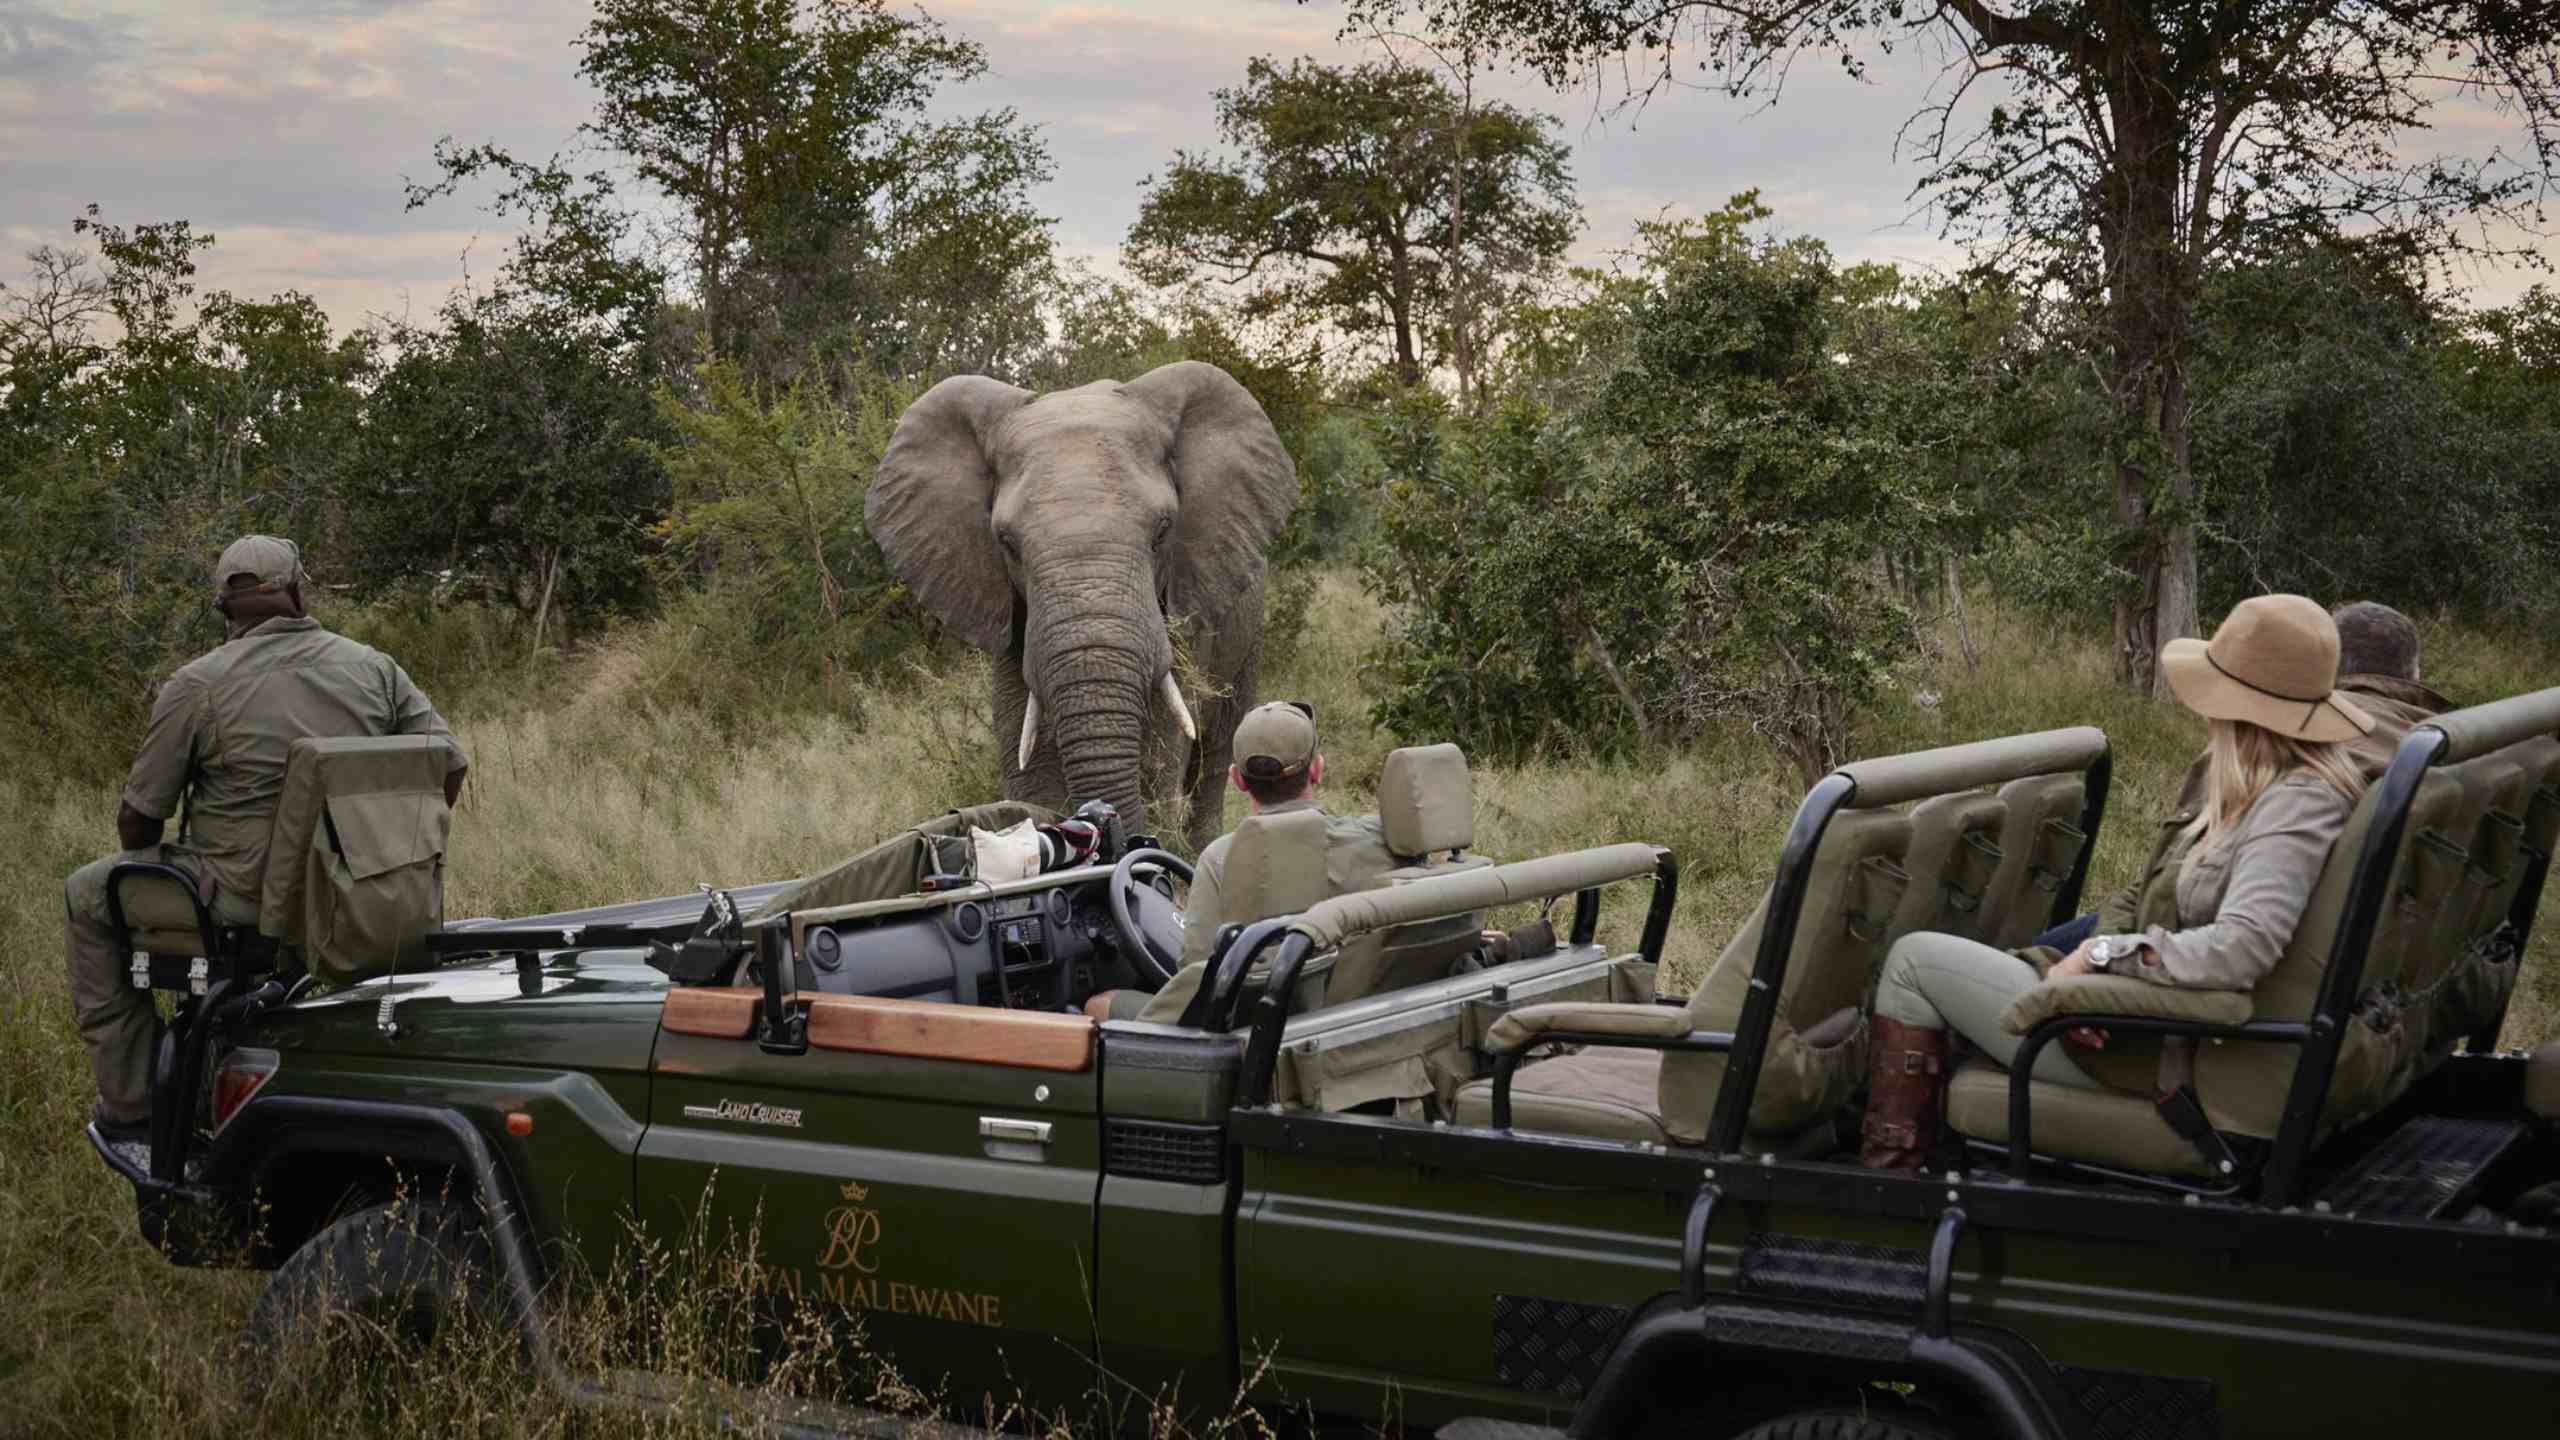 royal-malewane-thornybush-kruger-south-africa-game-drive-elephant